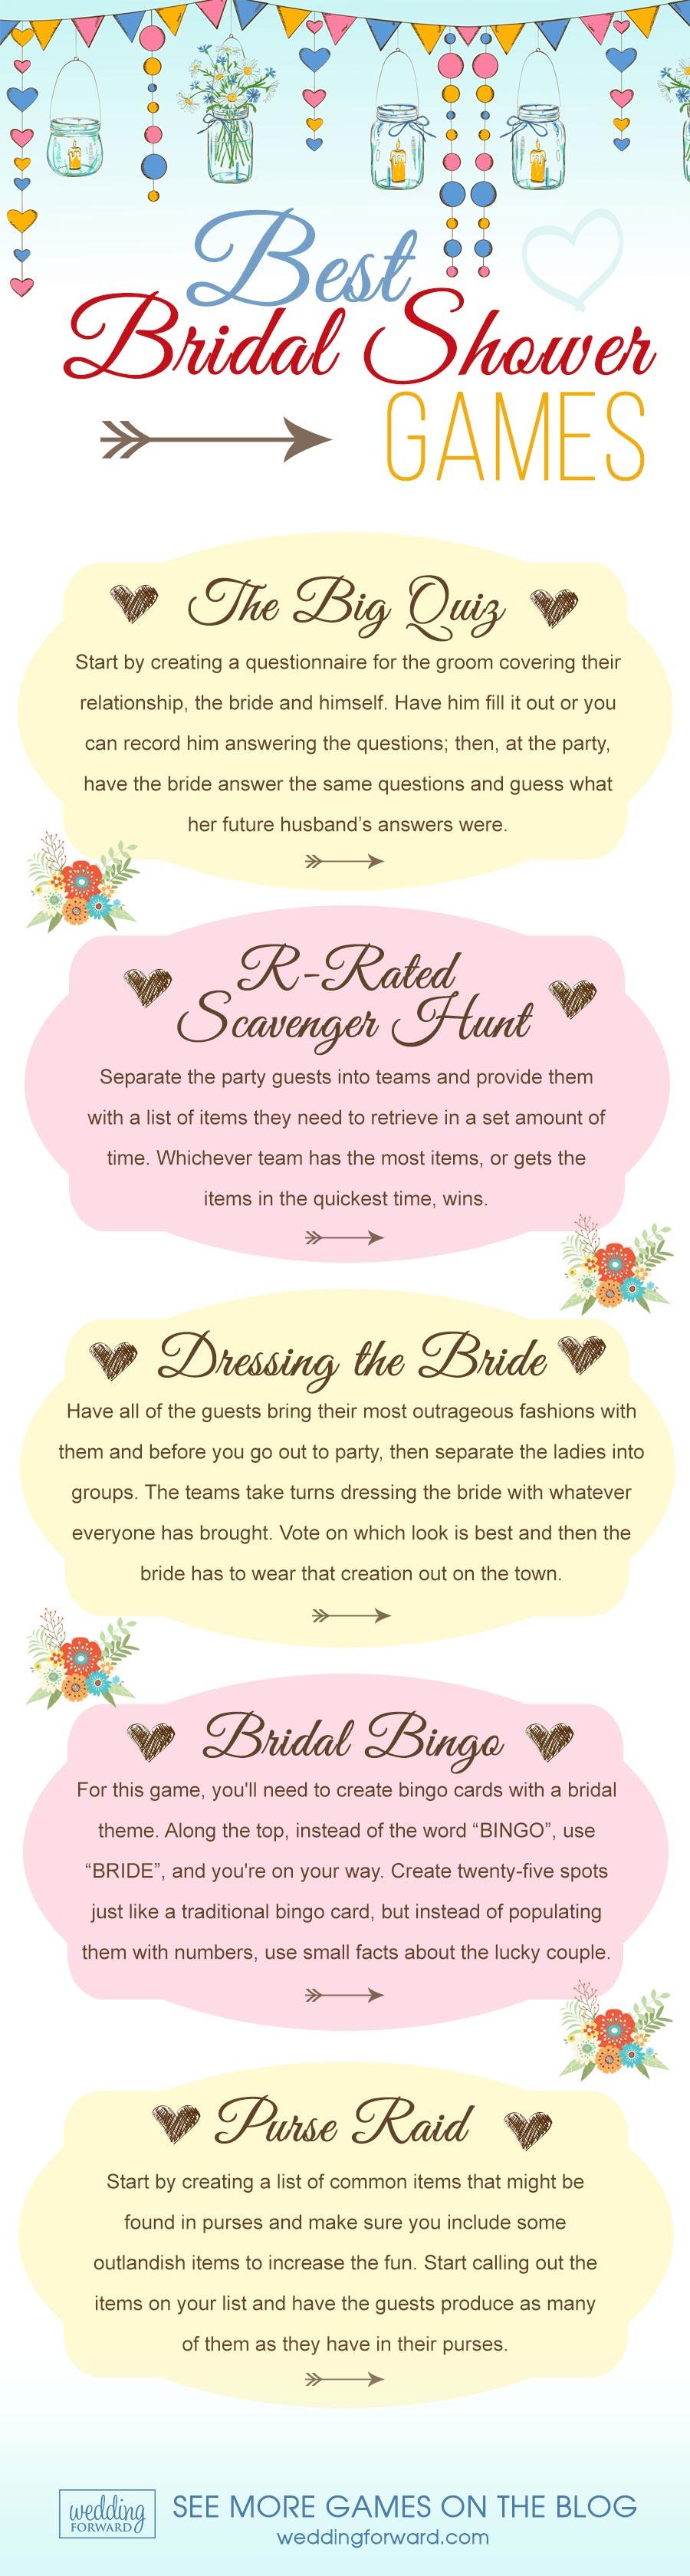 infographic best bridal shower games 5 fun quiz bingo dressing the bride